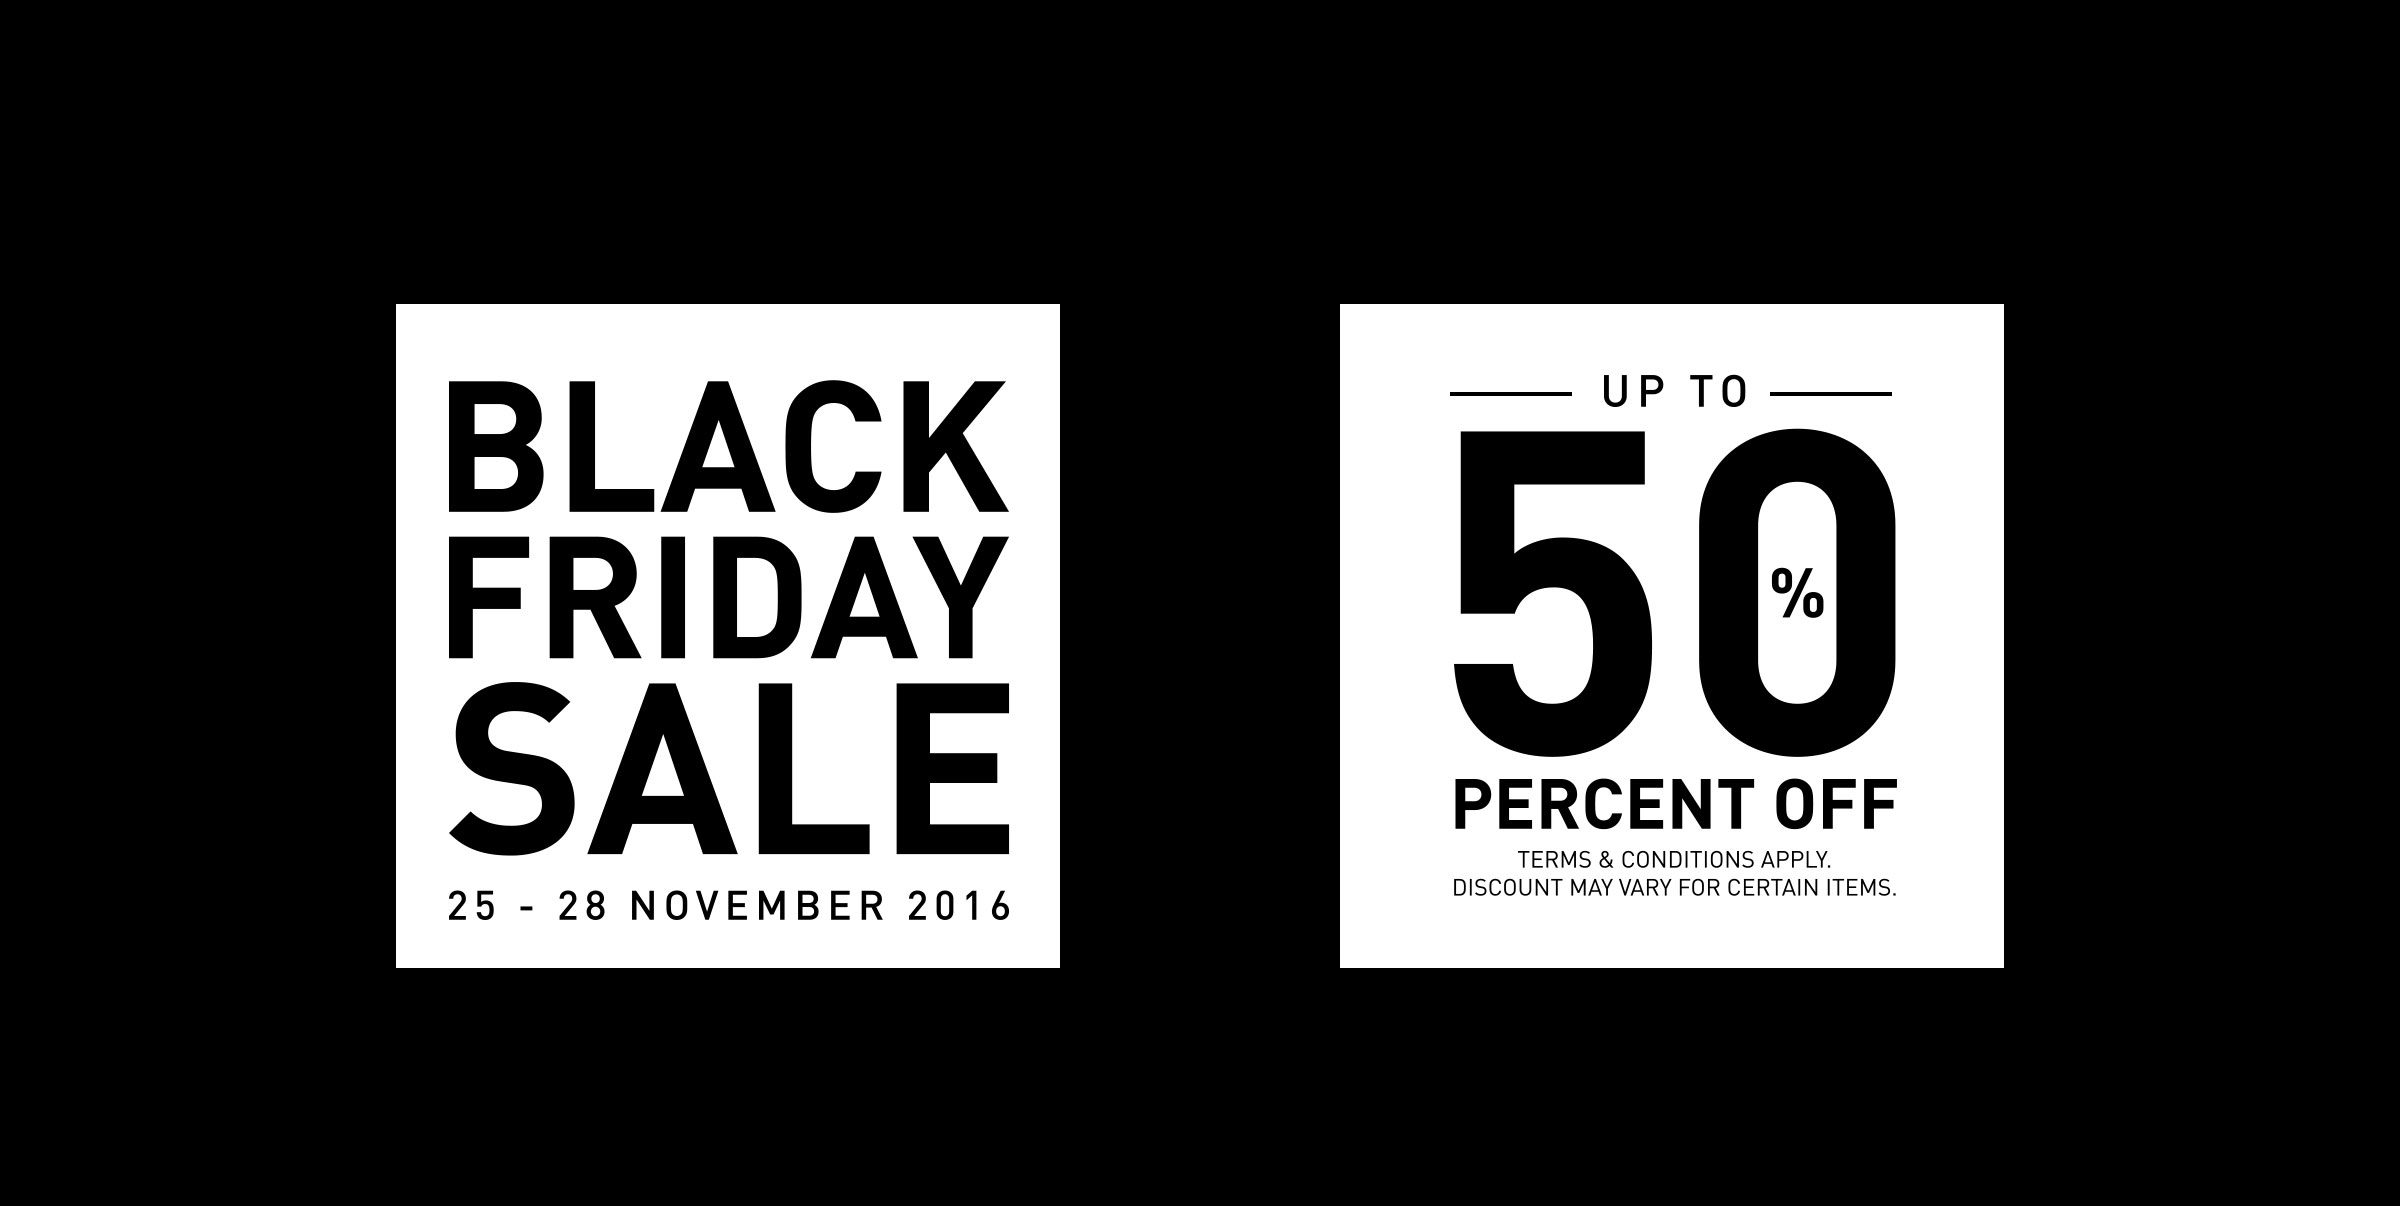 Key Power International Singapore Black Friday Sale Up to 50% Off Promotion 25-28 Nov 2016